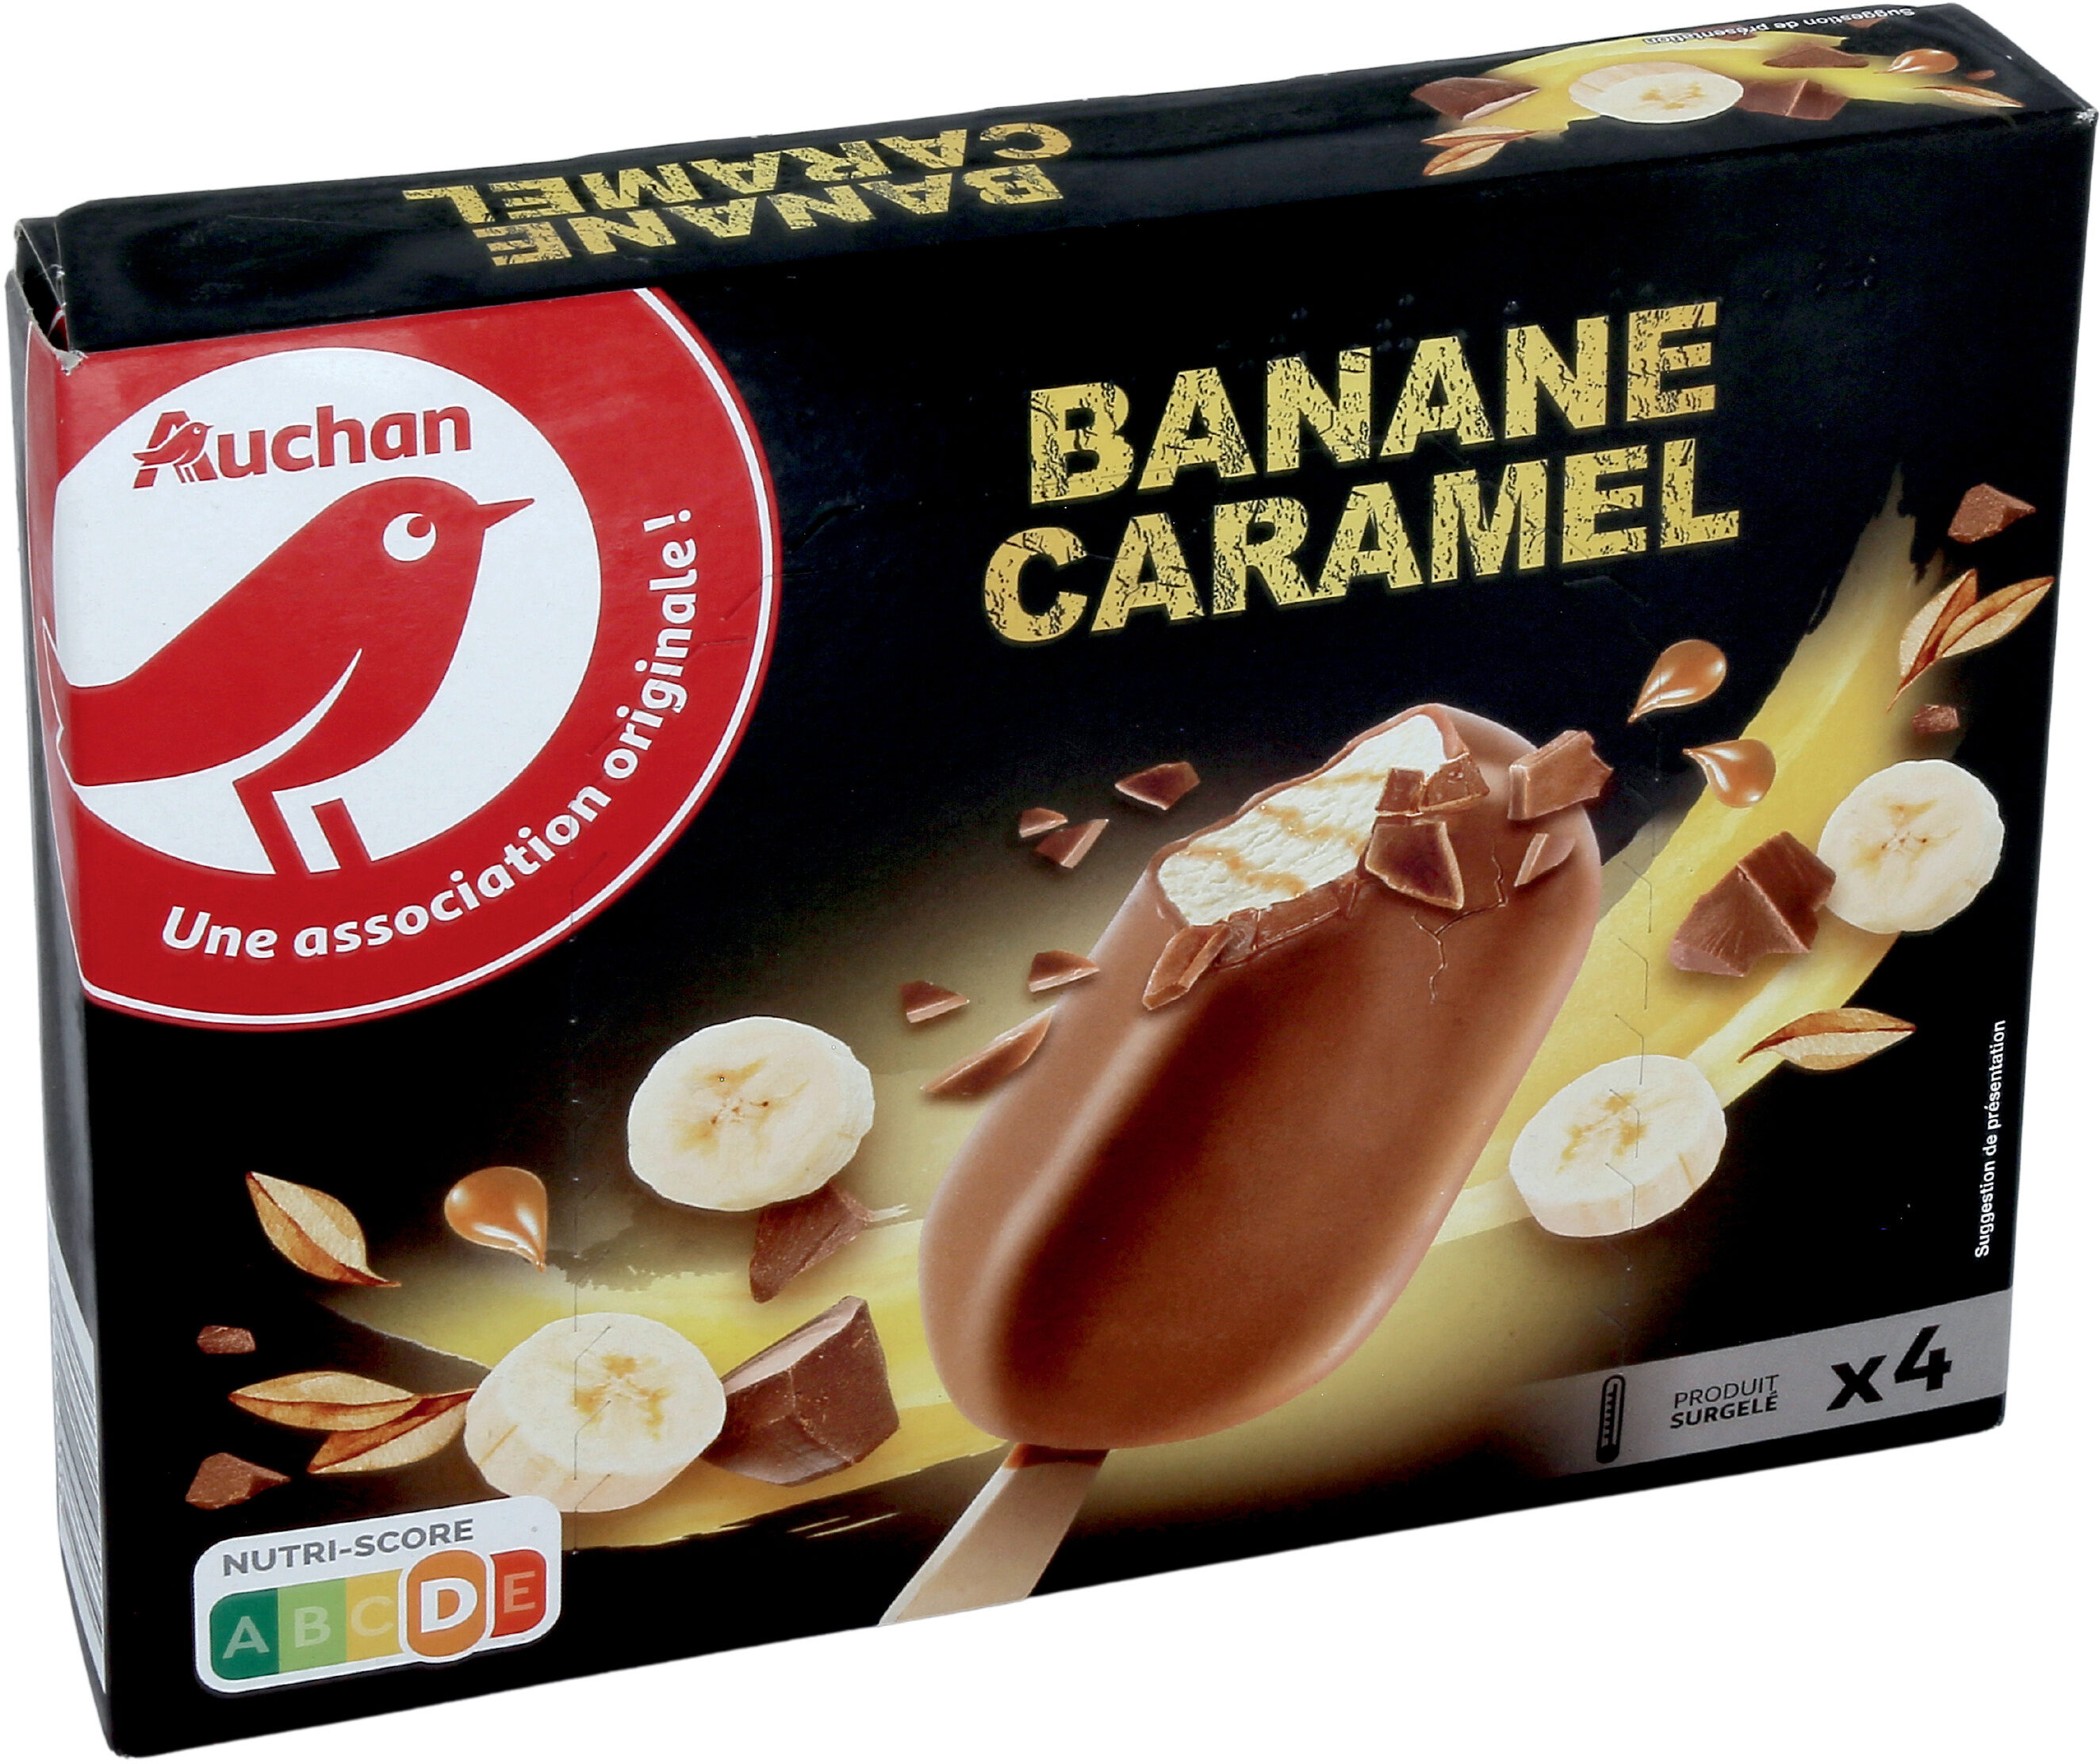 Banane caramel - Product - fr